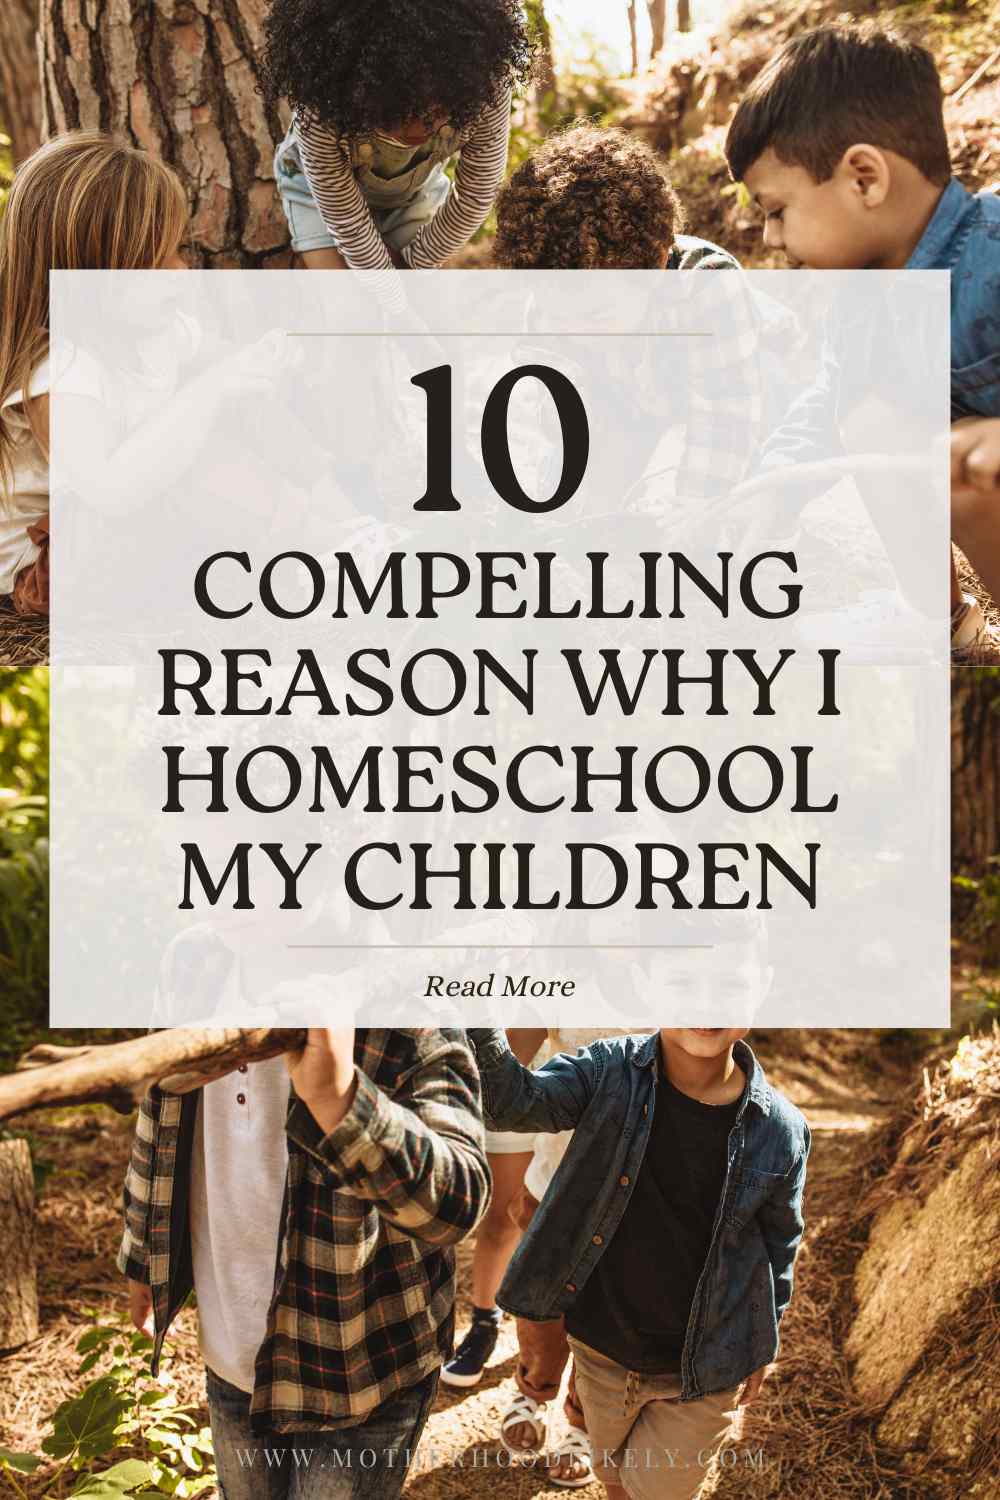 10 reasons to homeschool